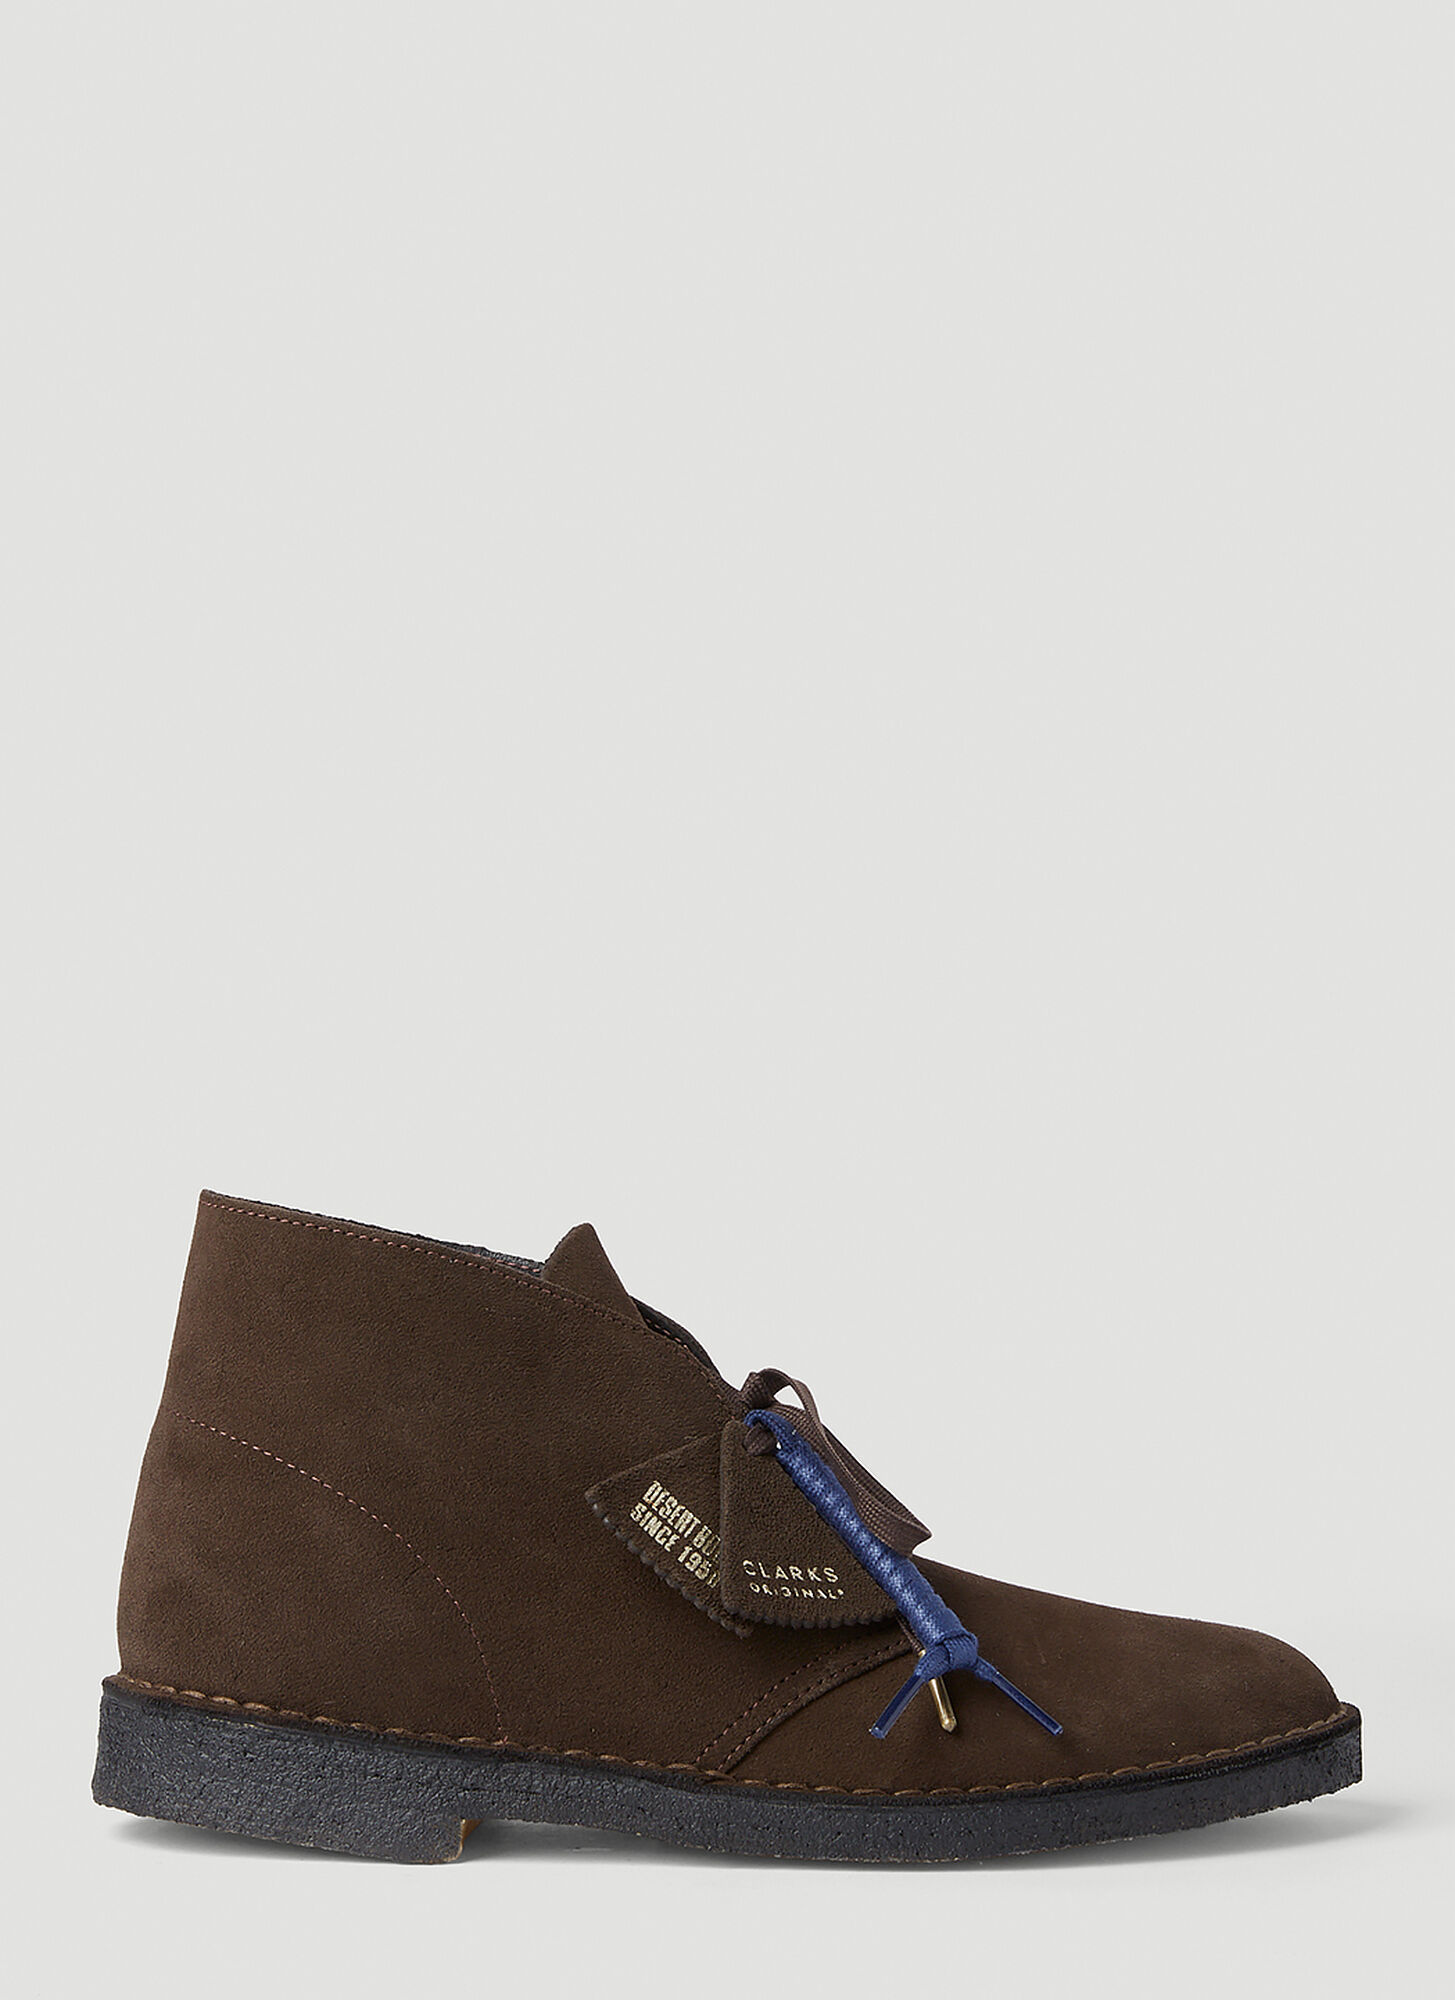 Clarks Originals Desert Boots Male Brown